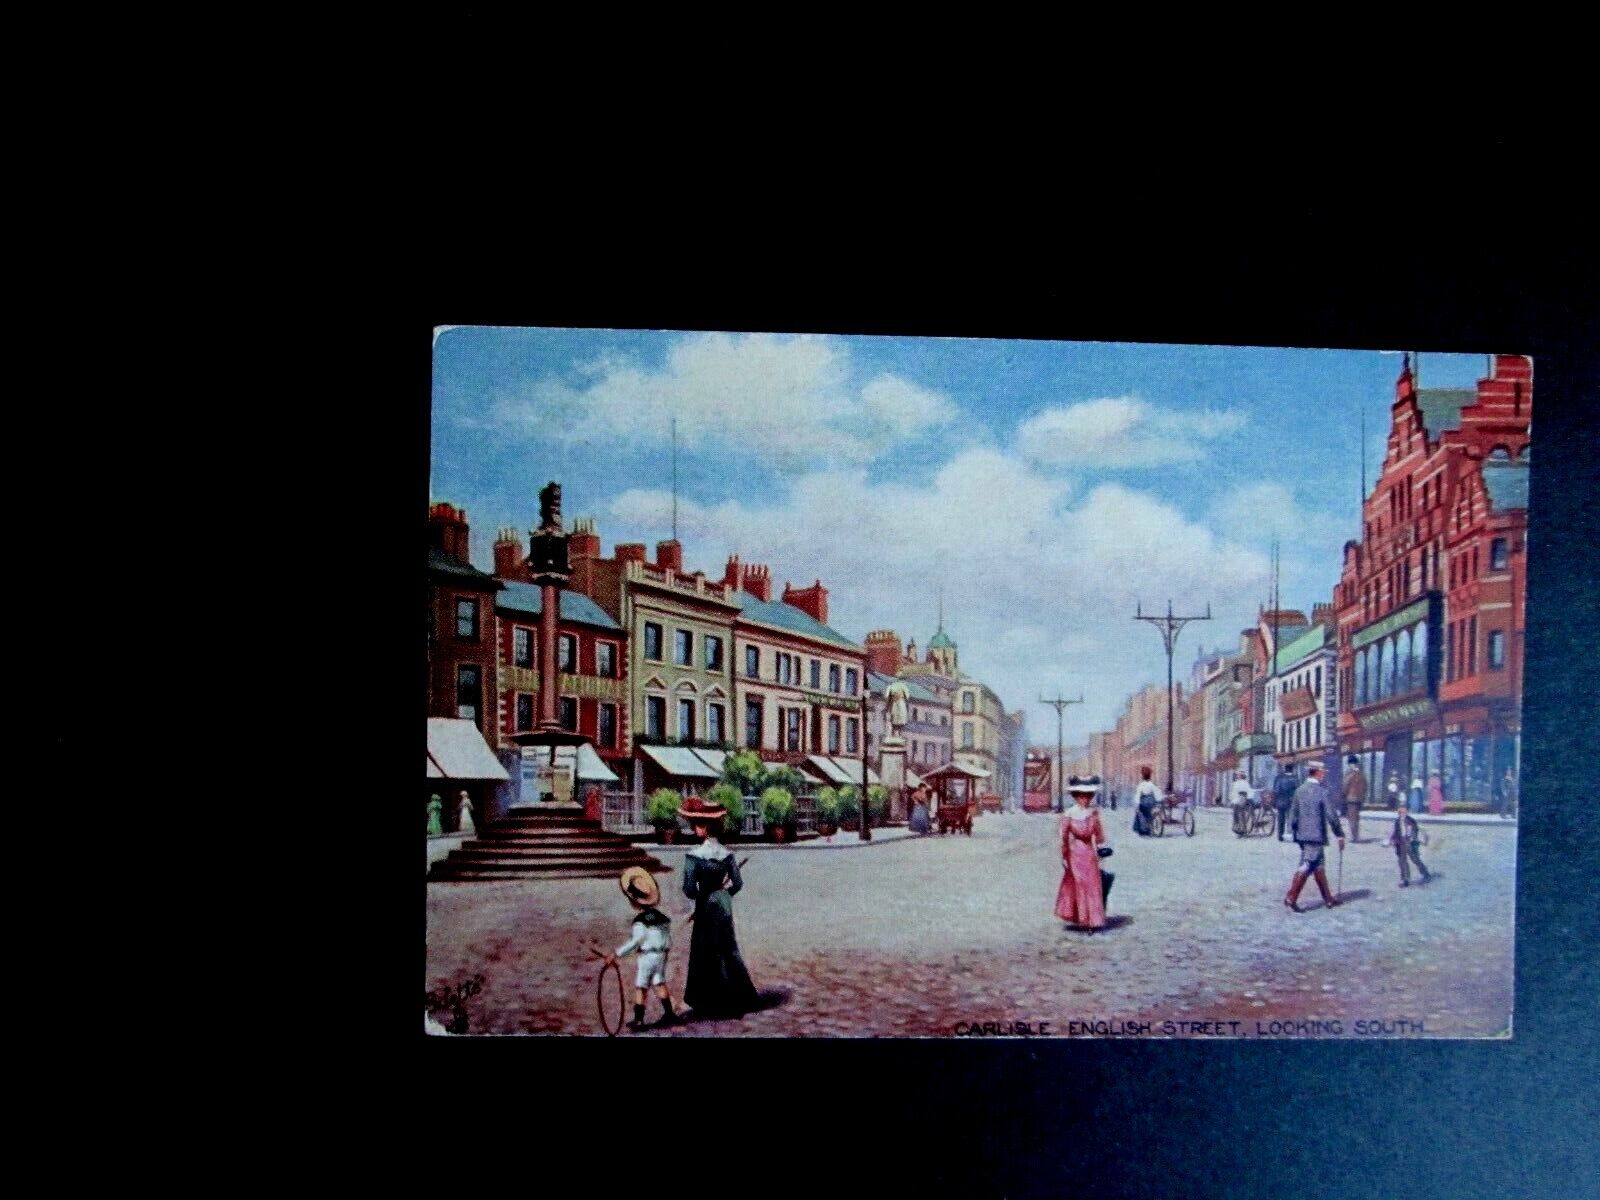 House Clearance - ENGLISH STREET, CARLISLE, CUMBRIA  -  A  VINTAGE TUCK CARD  - ARTIST DRAWN